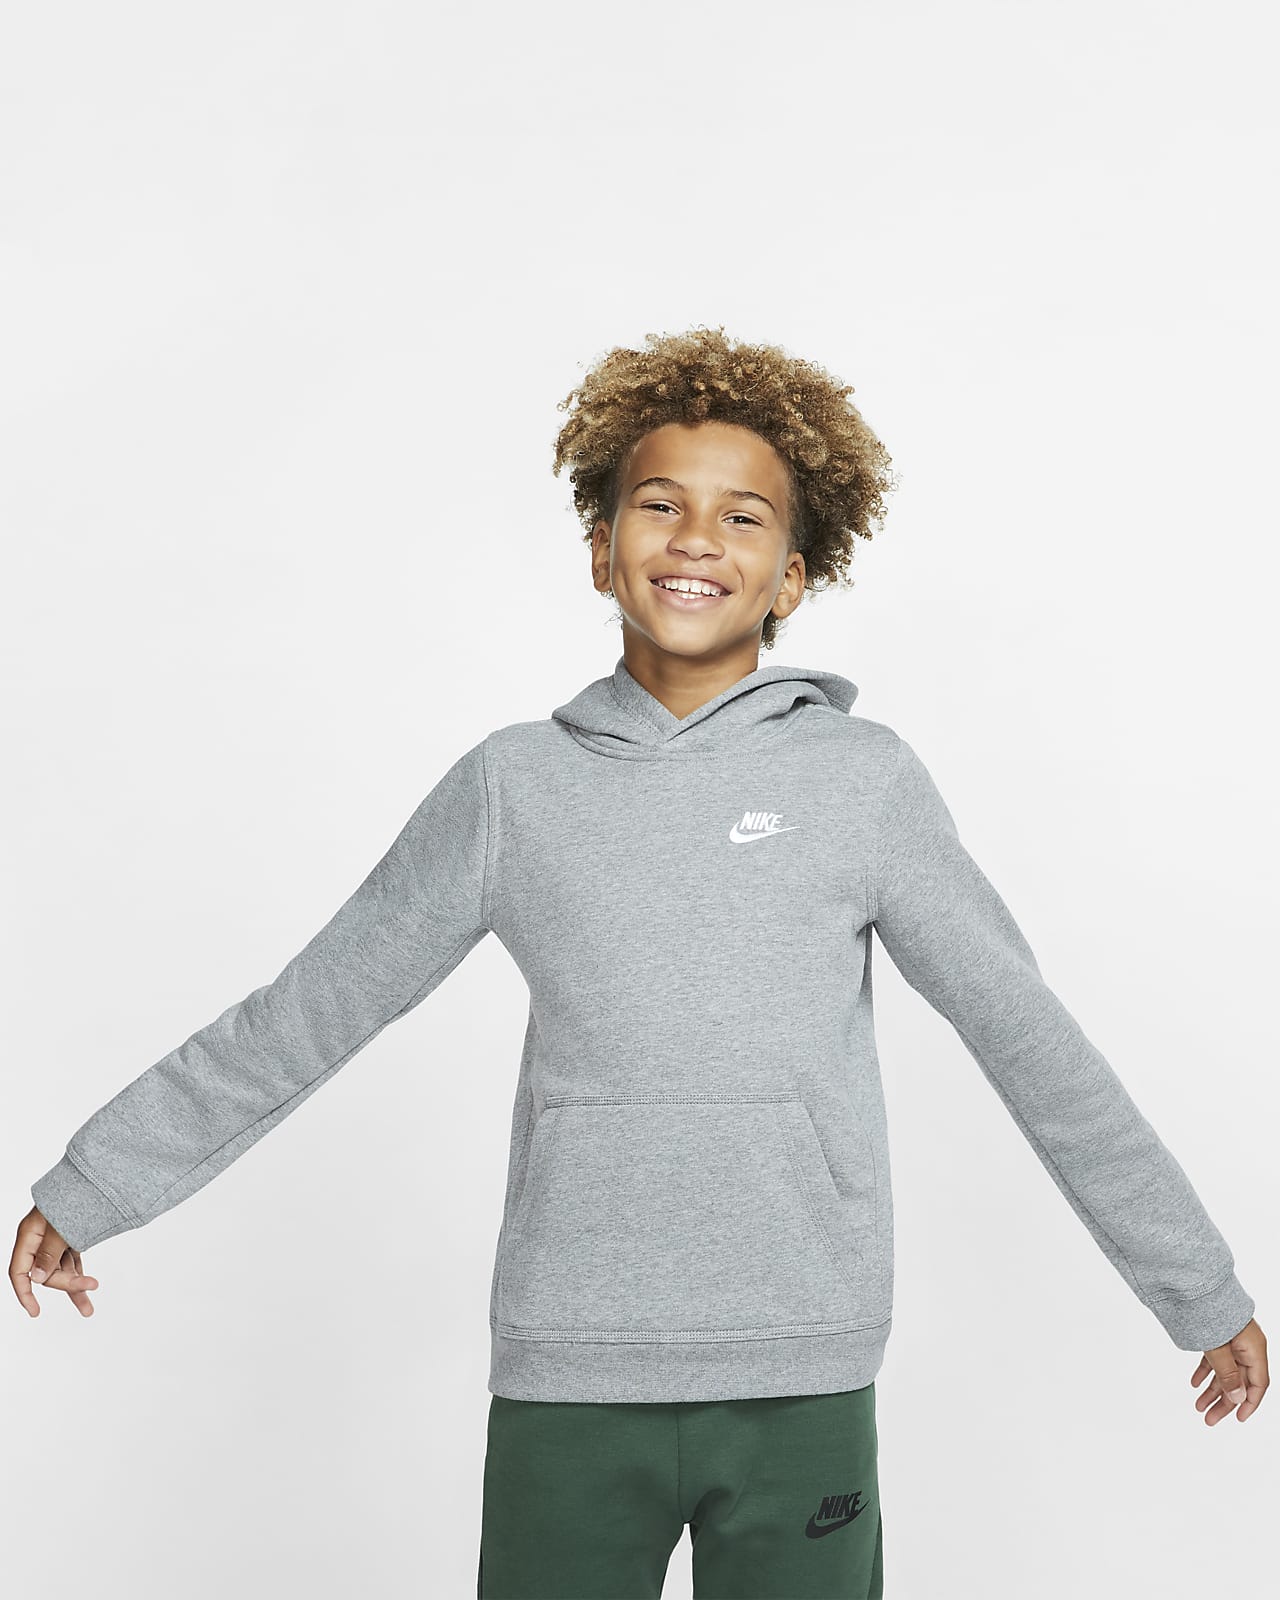 Nike Sportswear Club Pullover für ältere Kinder